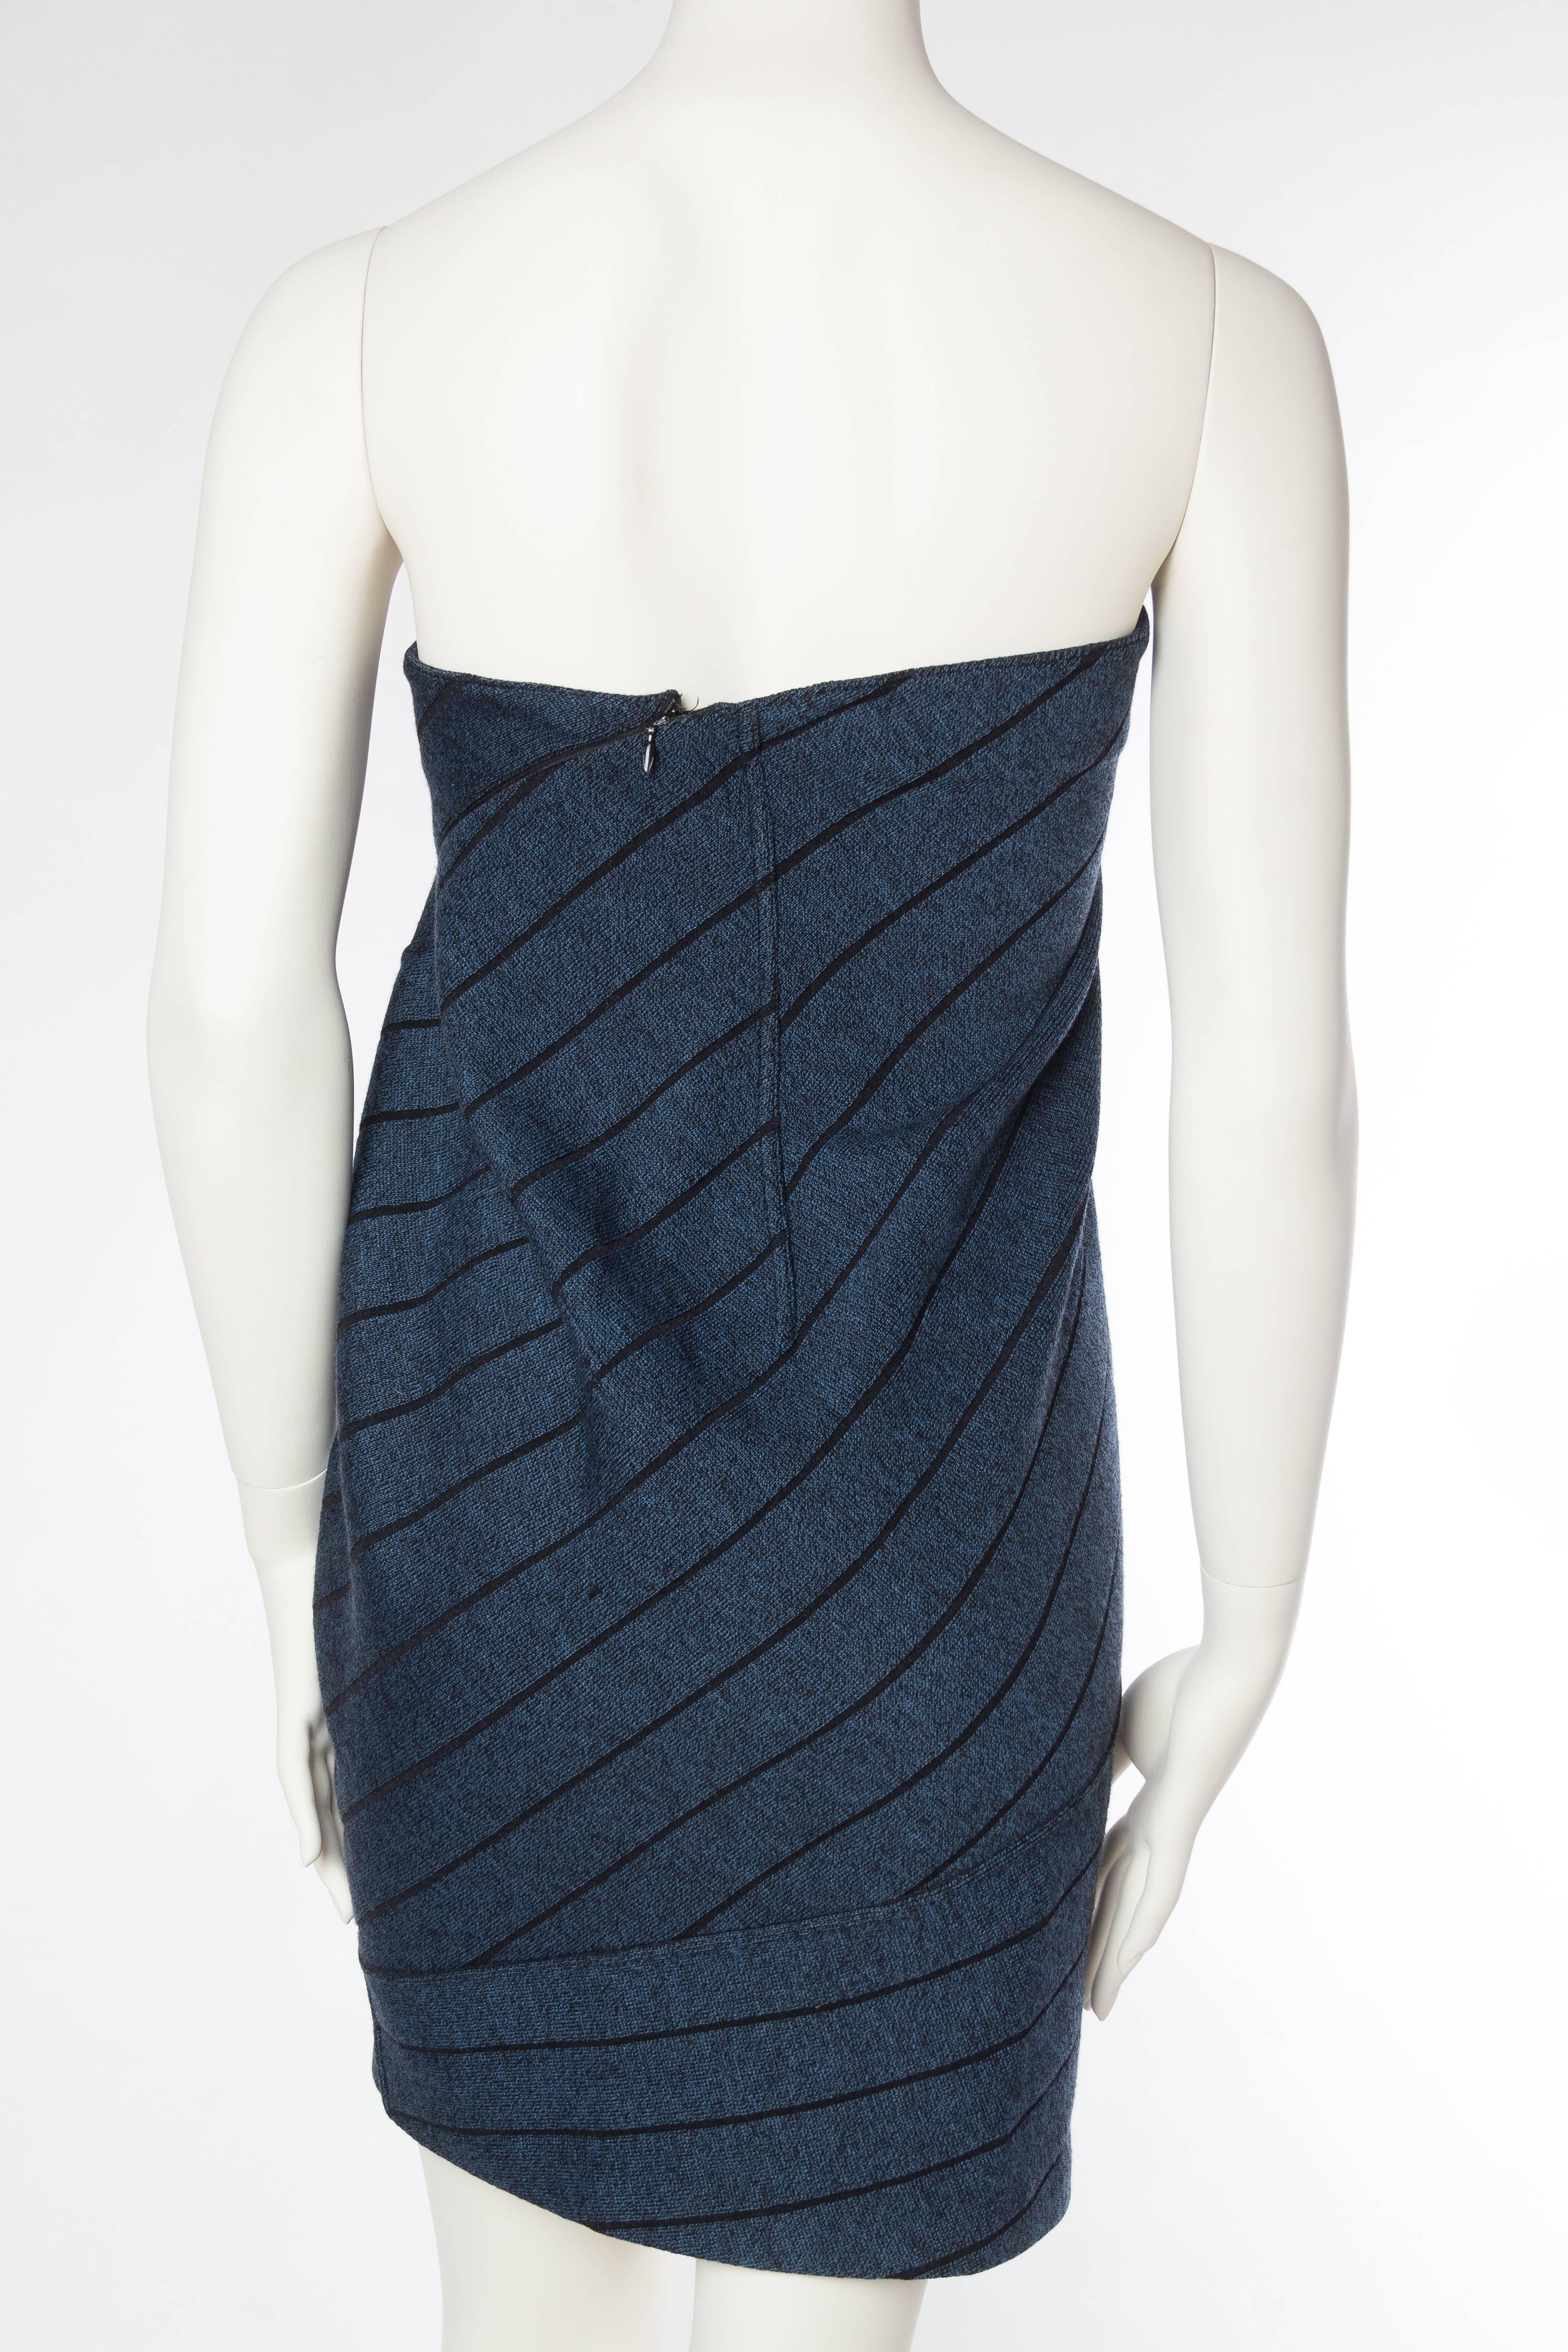 1980S AZZEDINE ALAIA Blue & Black Rayon Blend Knit High-Waisted Skirt For Sale 2